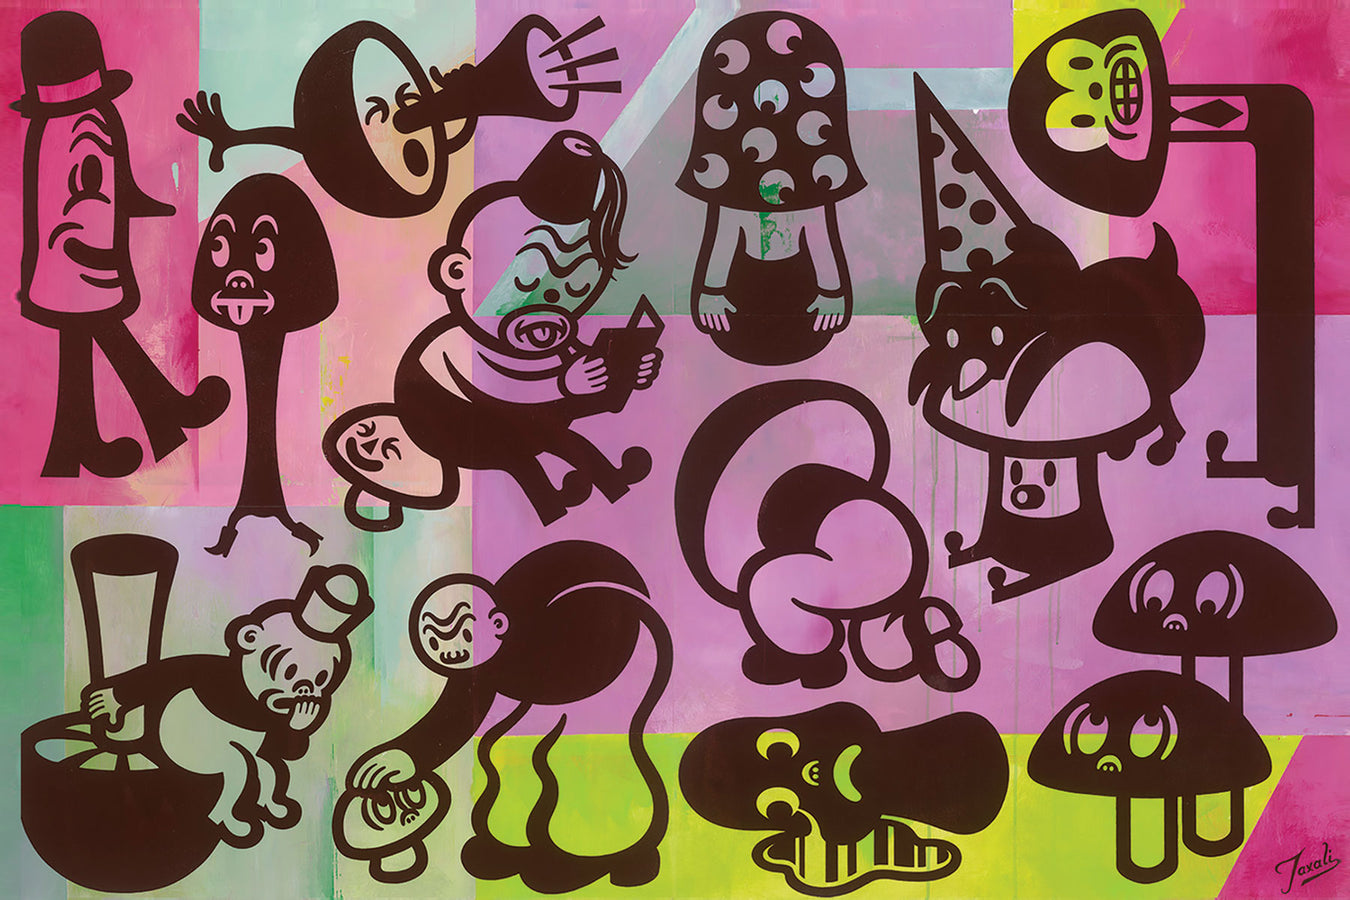 The Art of the Mushroom